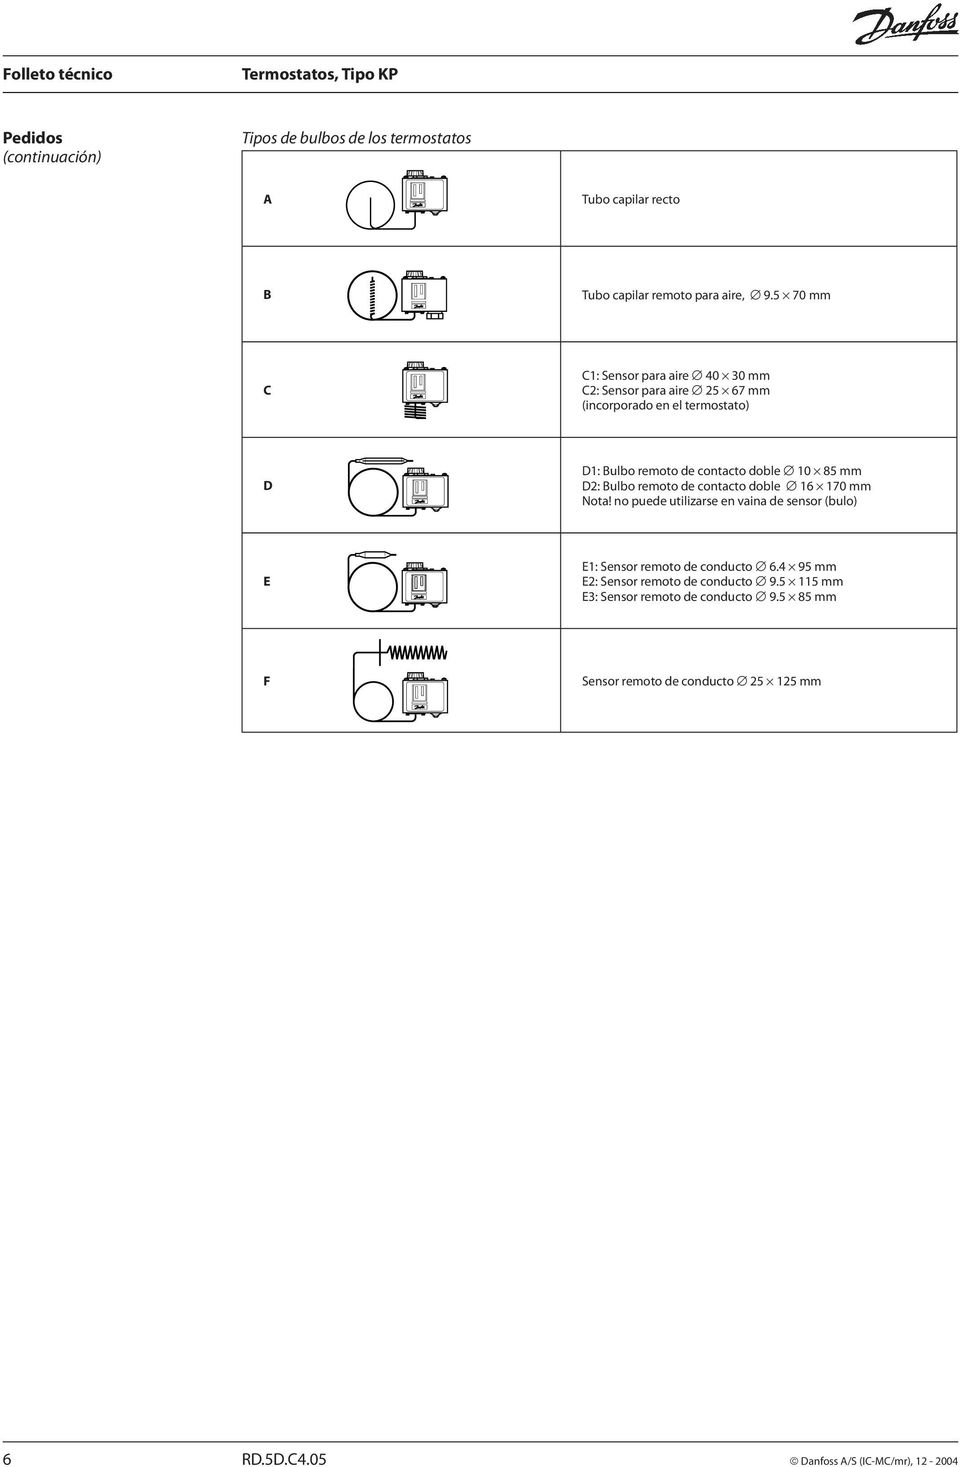 85 mm D2: Bulbo remoto de contacto doble 16 170 mm Nota! no puede utilizarse en vaina de sensor (bulo) E E1: Sensor remoto de conducto 6.